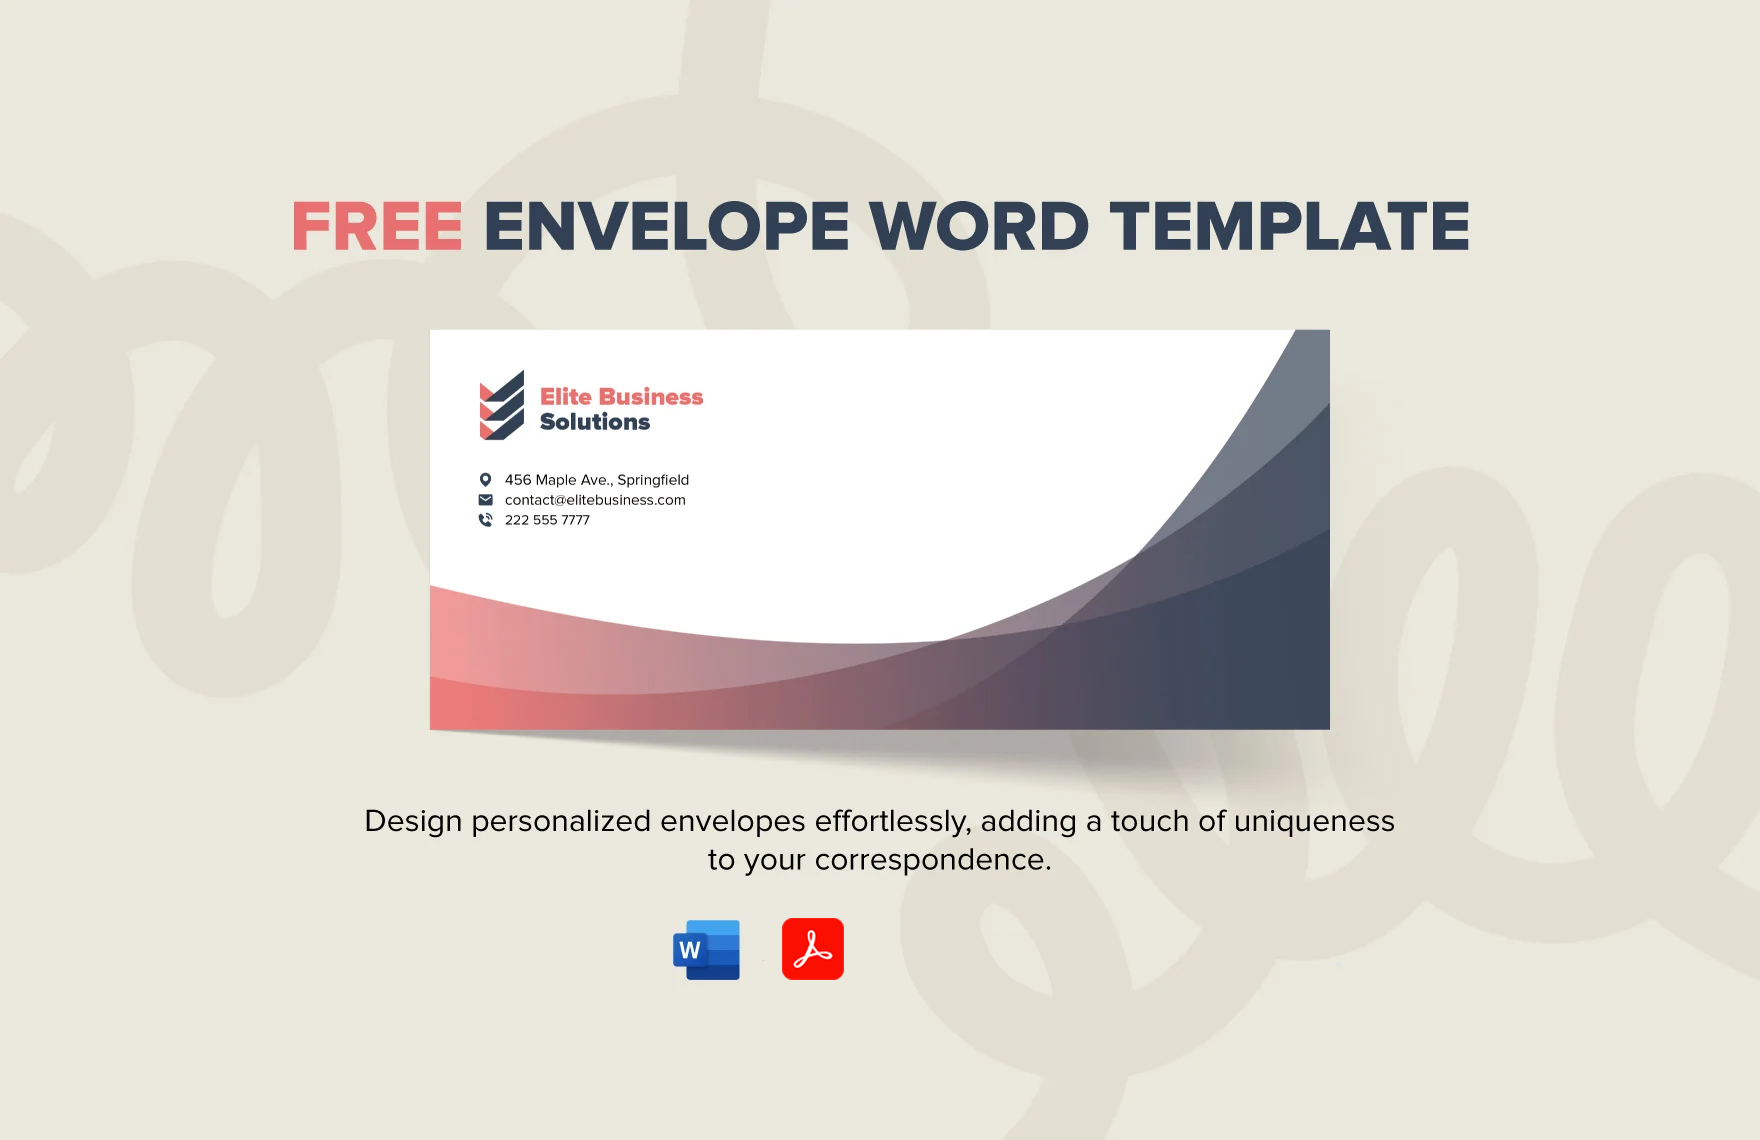 Free Envelope Word Template in Word, Google Docs, PDF